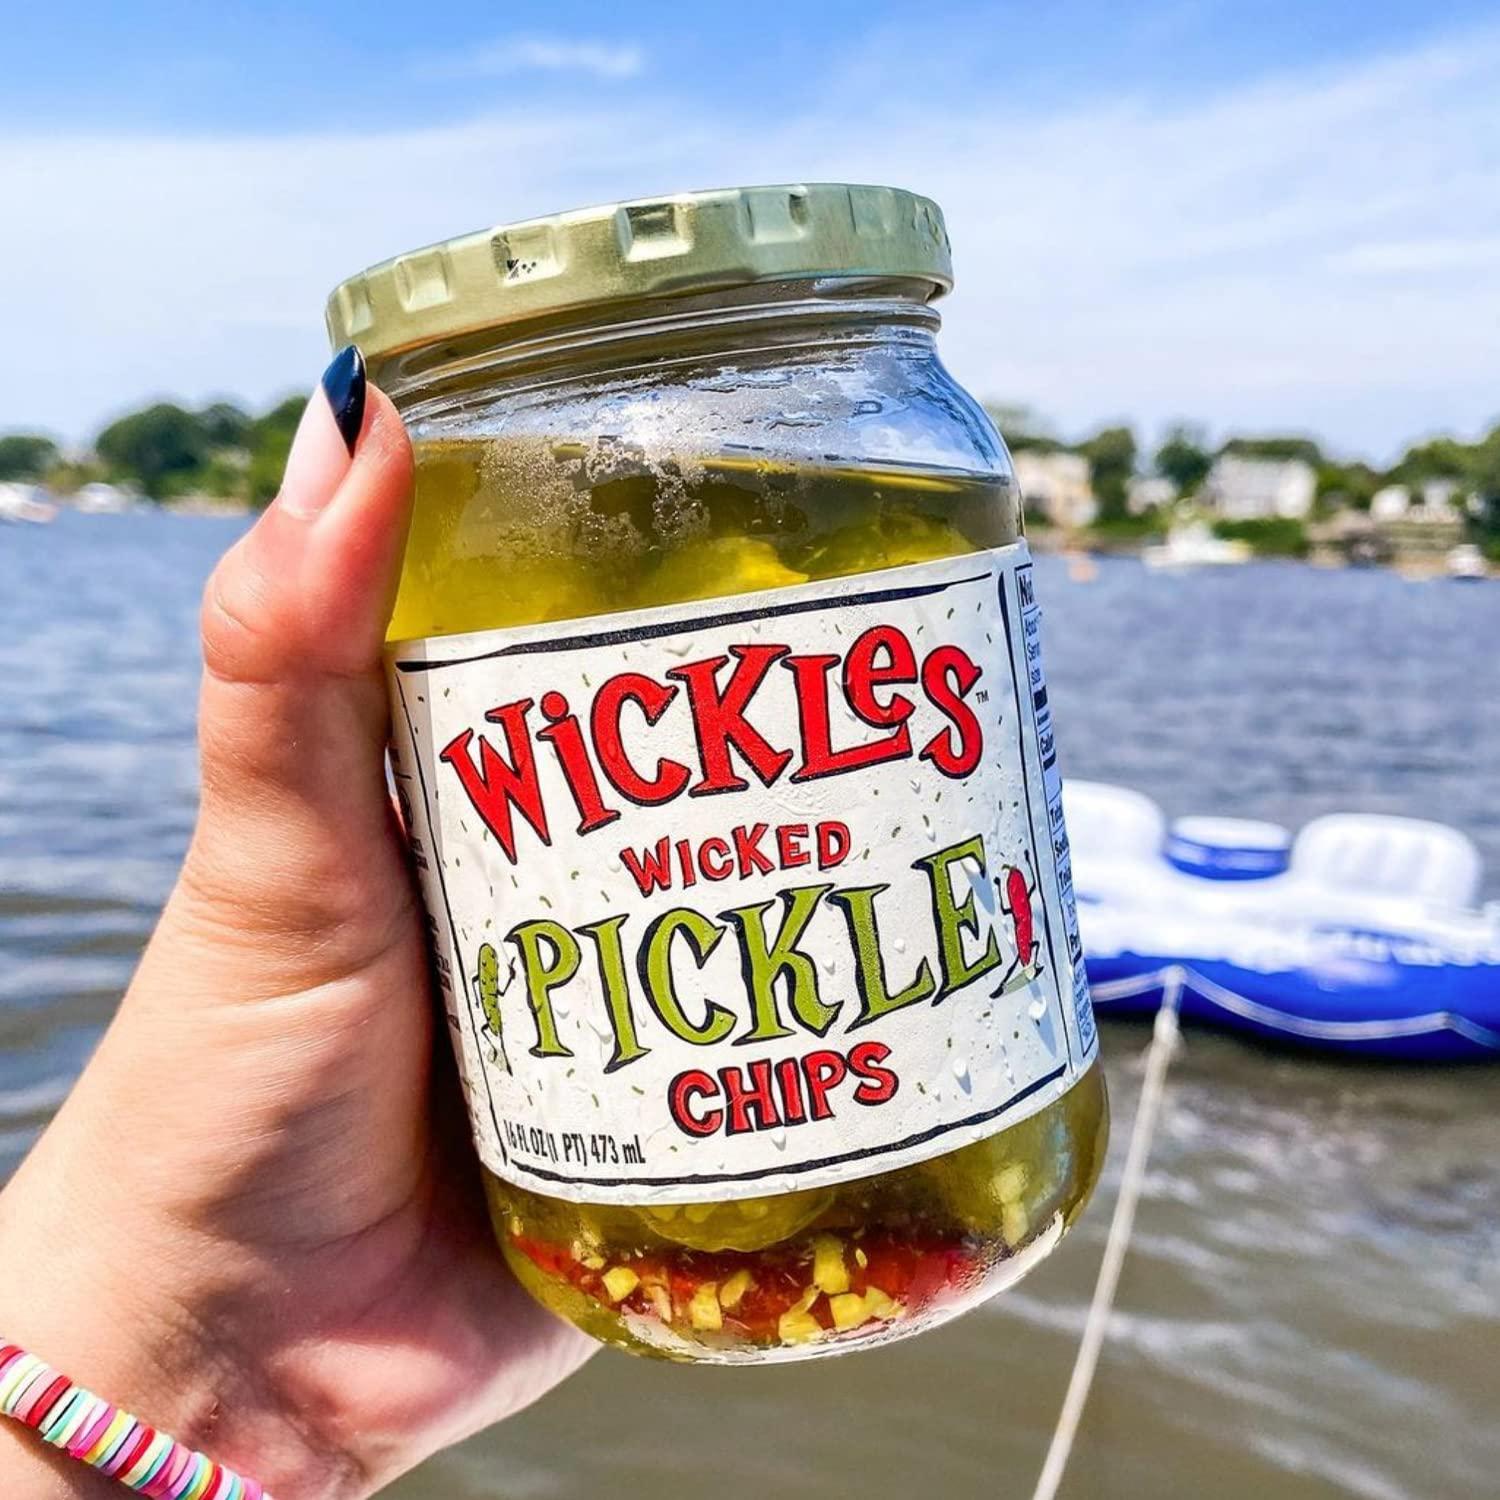 Wickles Original Pickle 16 OZ™ - Wickles Pickles